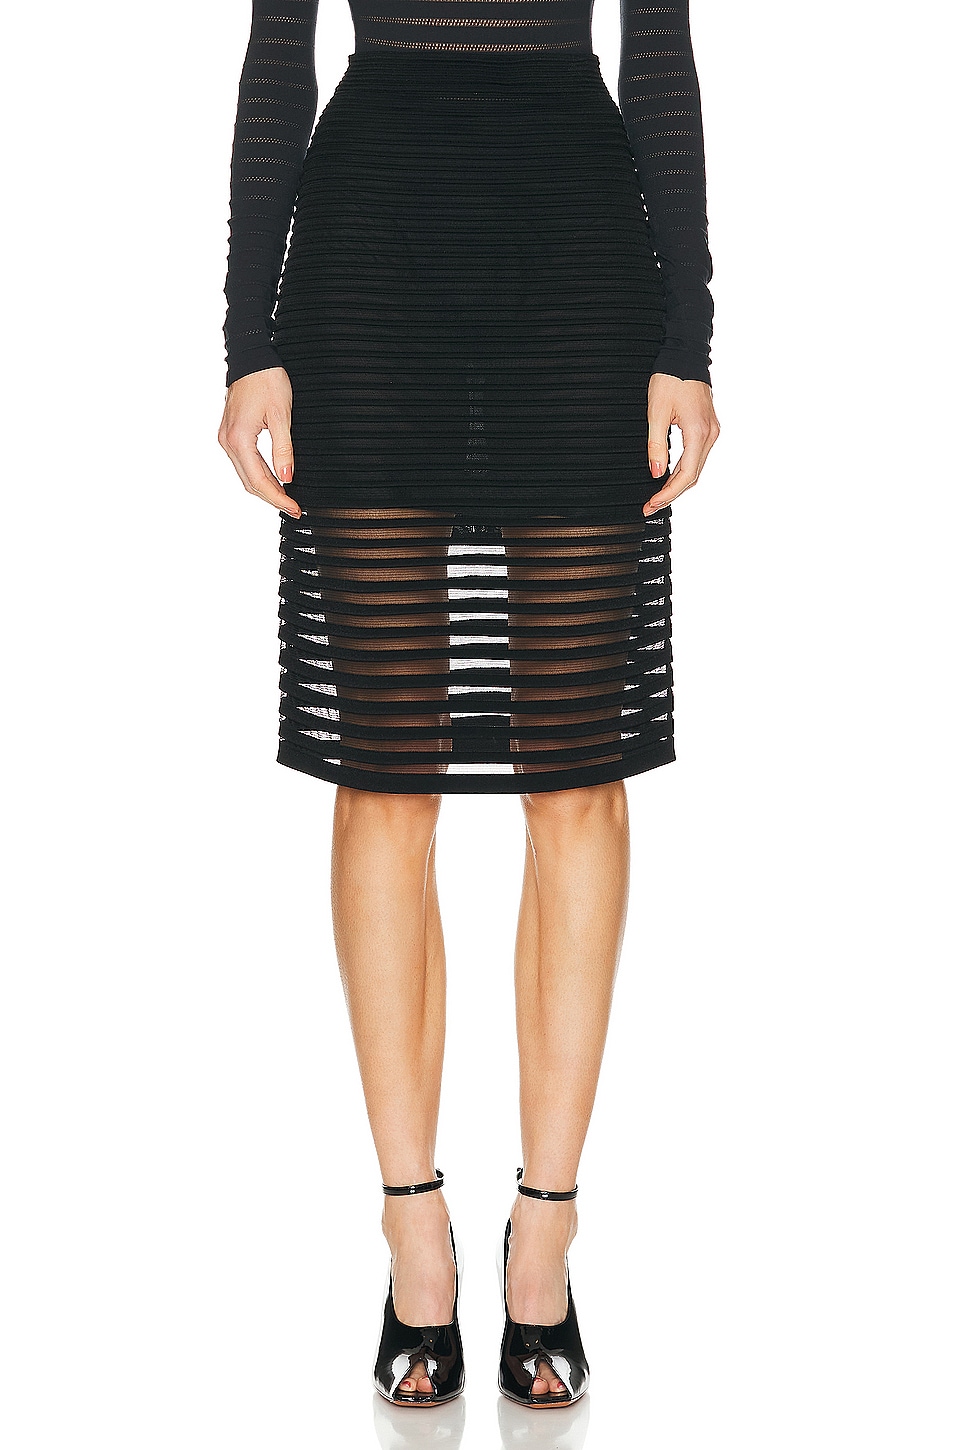 ALAÏA Striped Pencil Skirt in Black